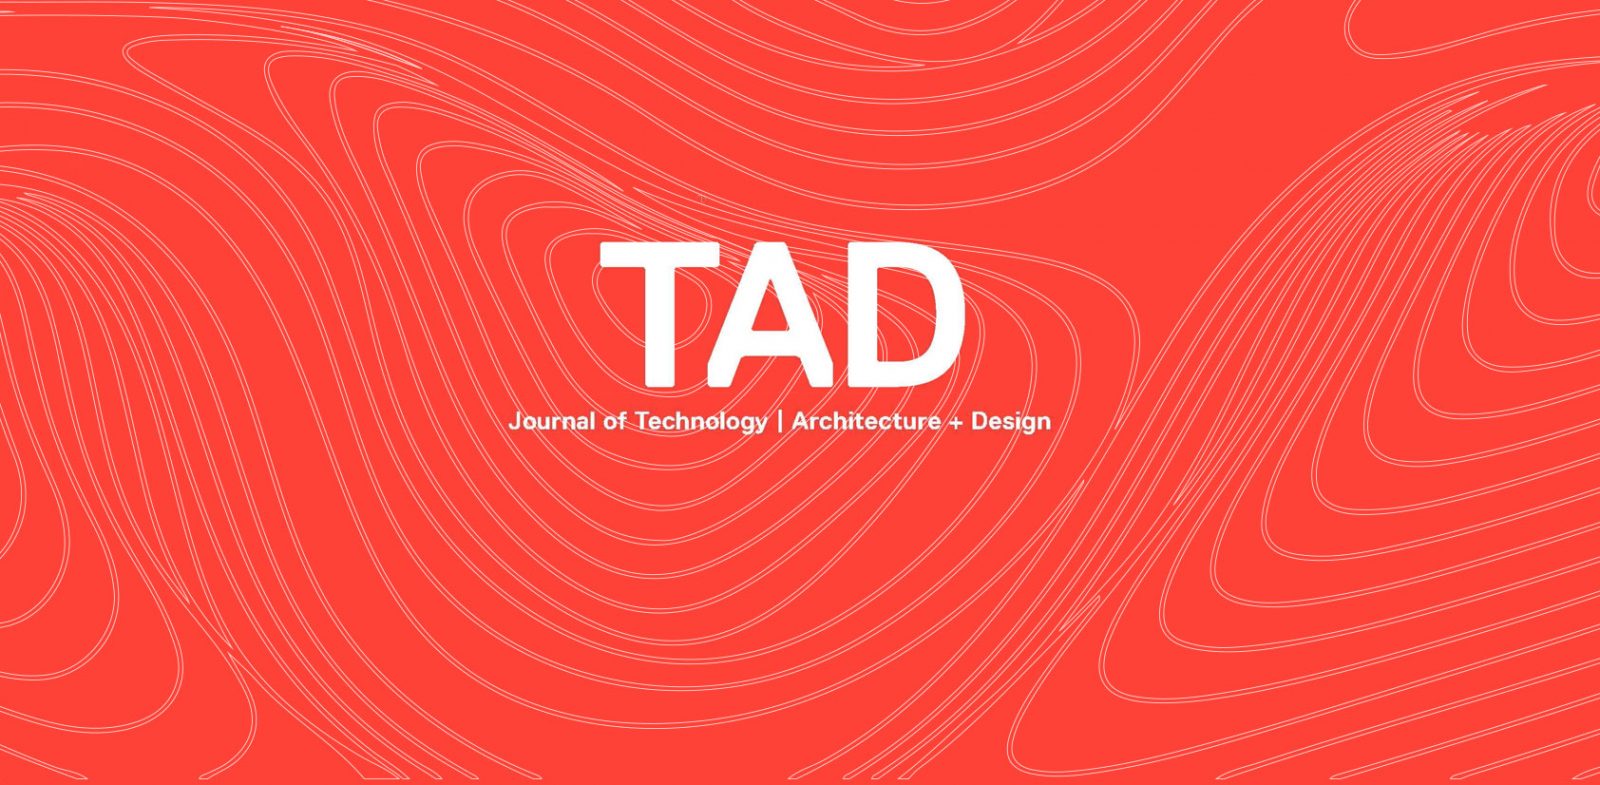 Associate Dean Marc J. Neveu Explores Design Research with TAD